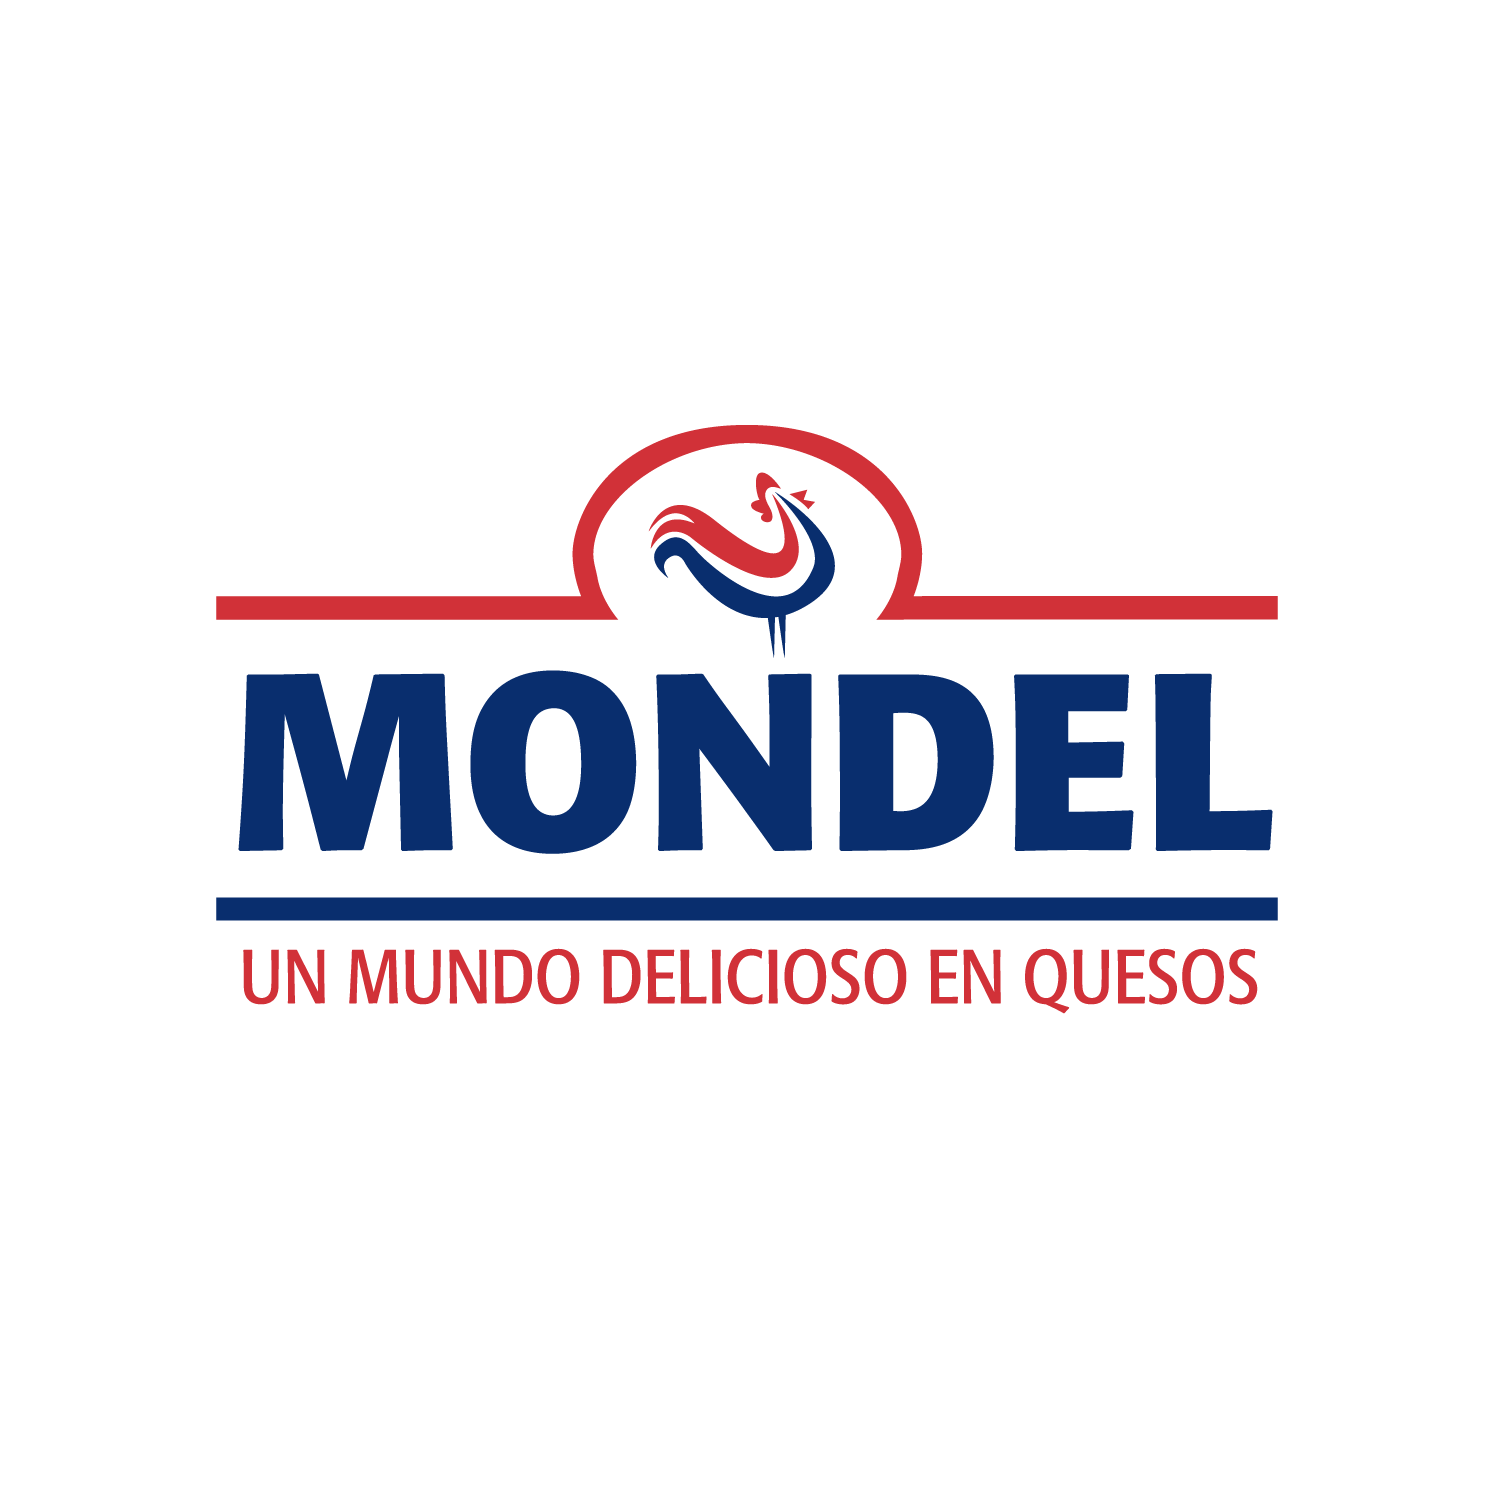 Mondel